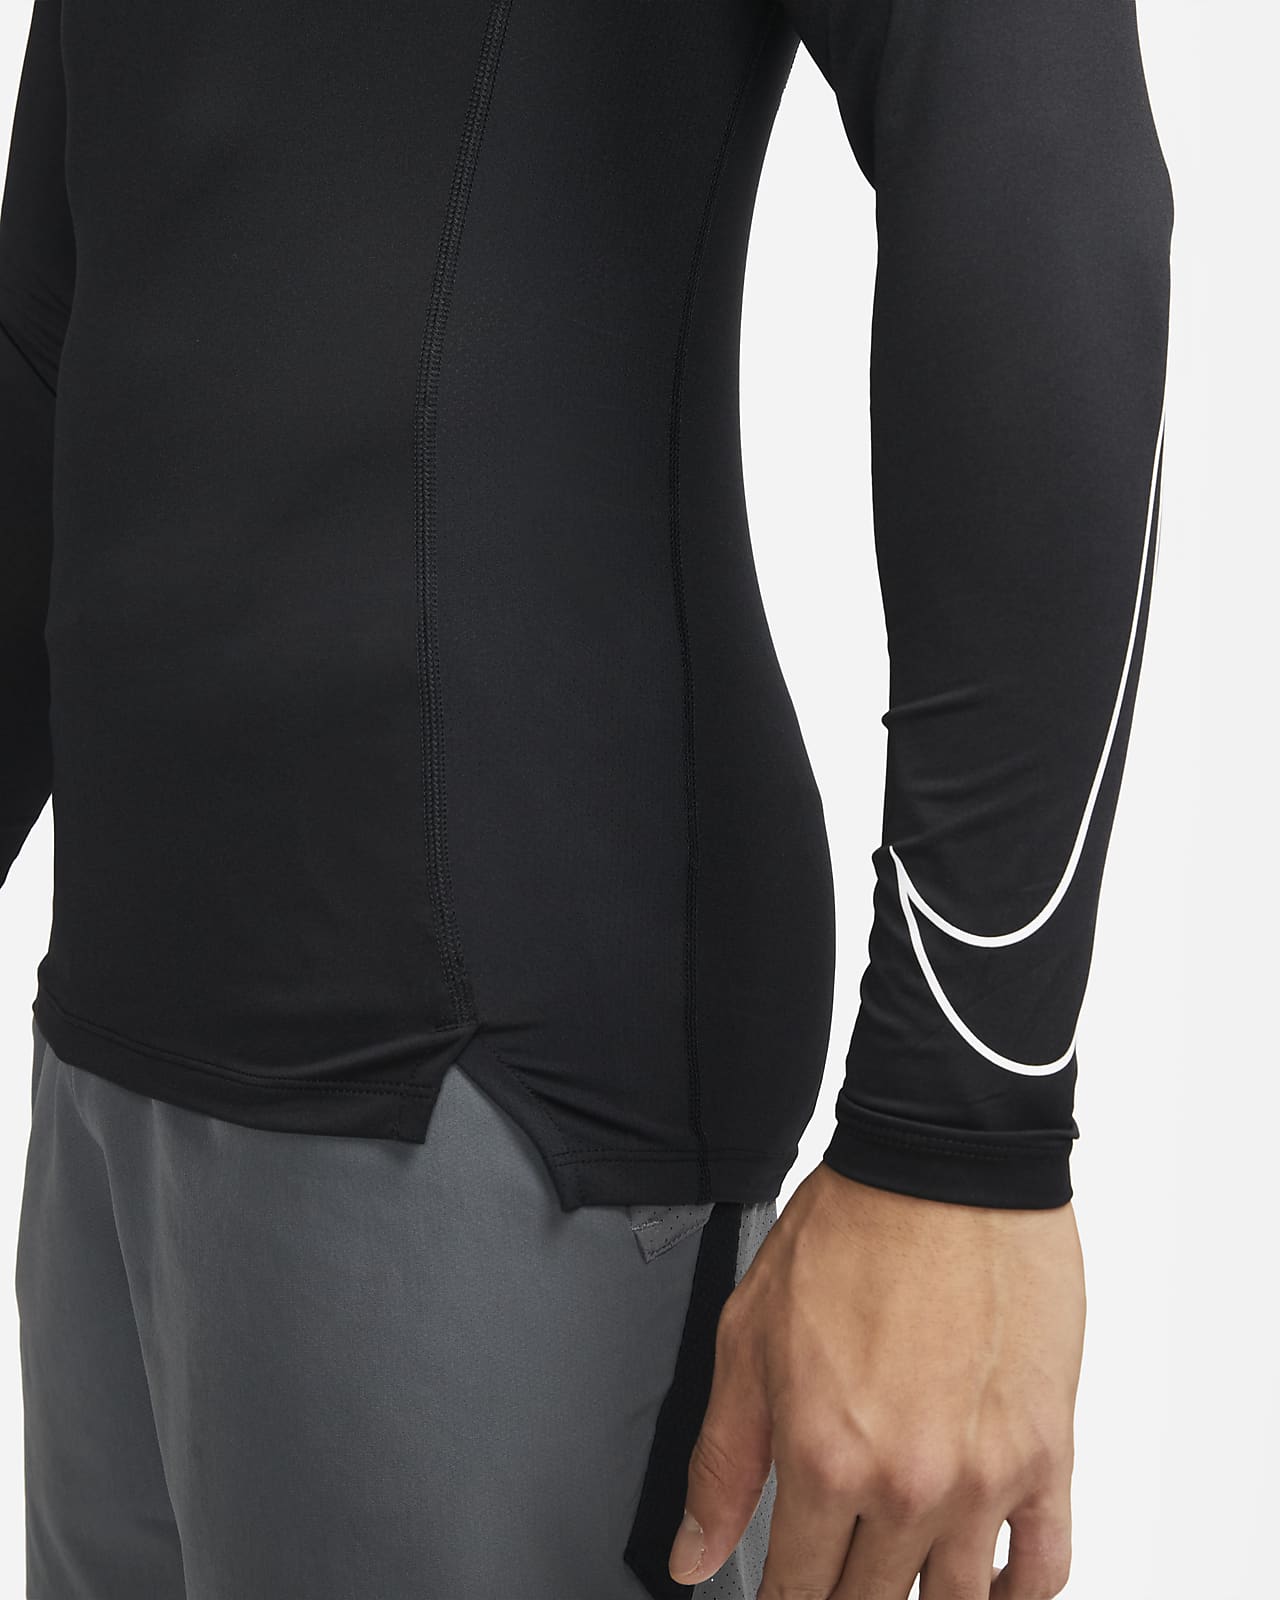 Preconcepción Armonioso papi Nike Pro Dri-FIT Men's Tight Fit Long-Sleeve Top. Nike JP